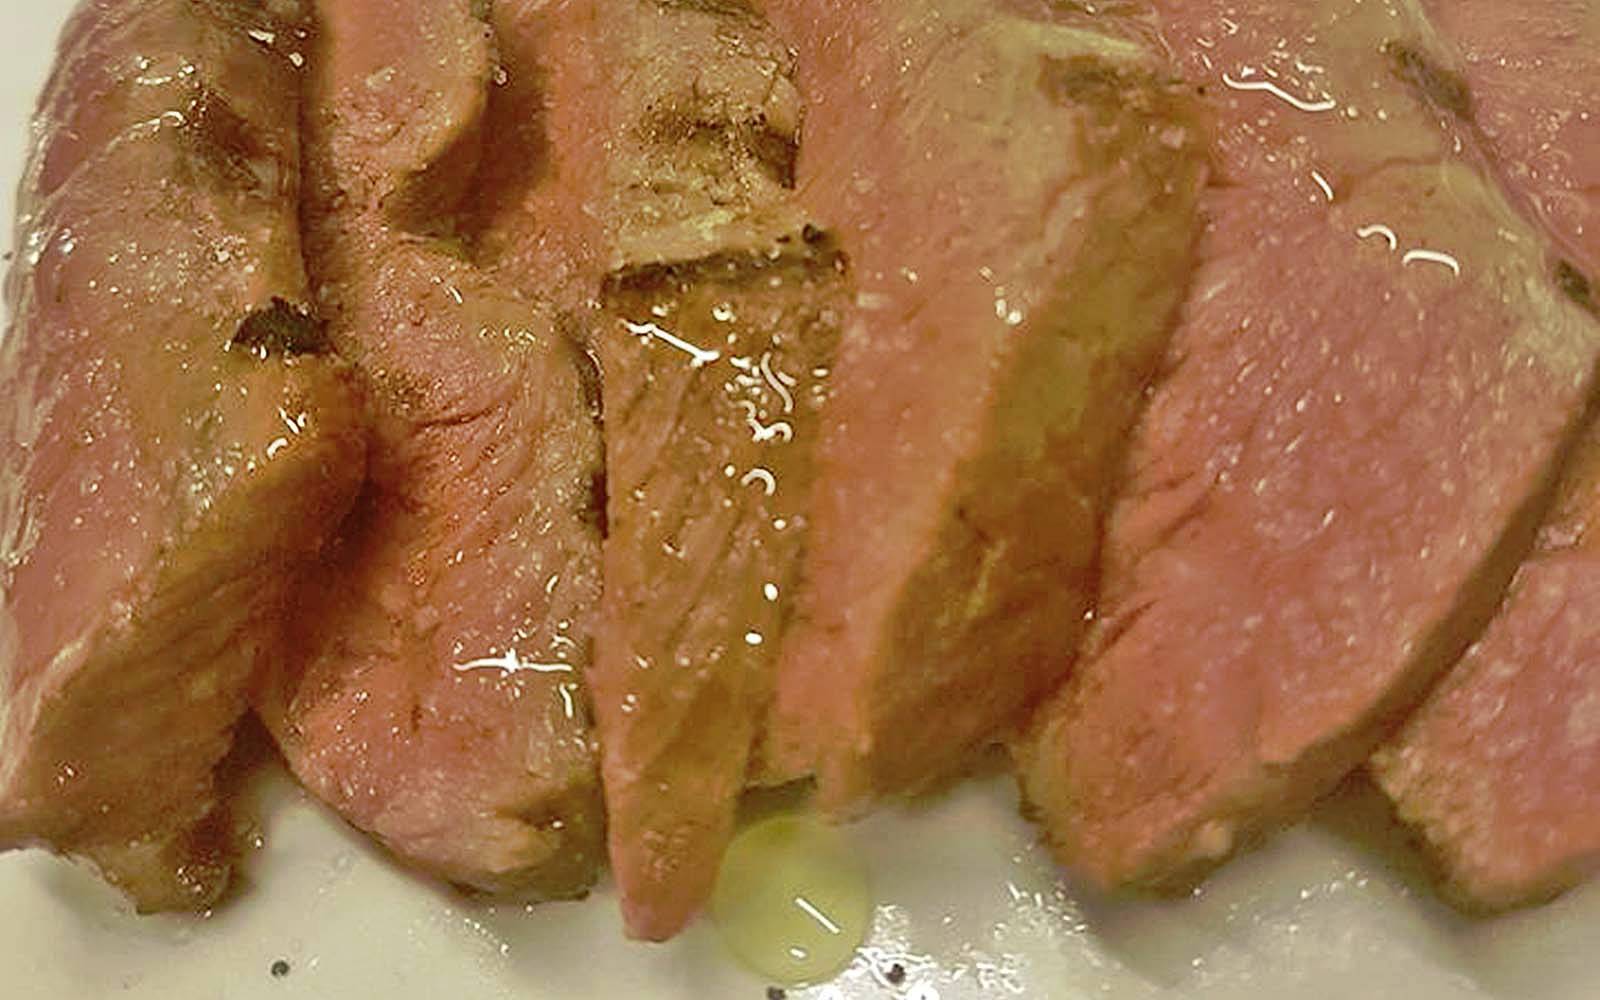 Heifer steak slices